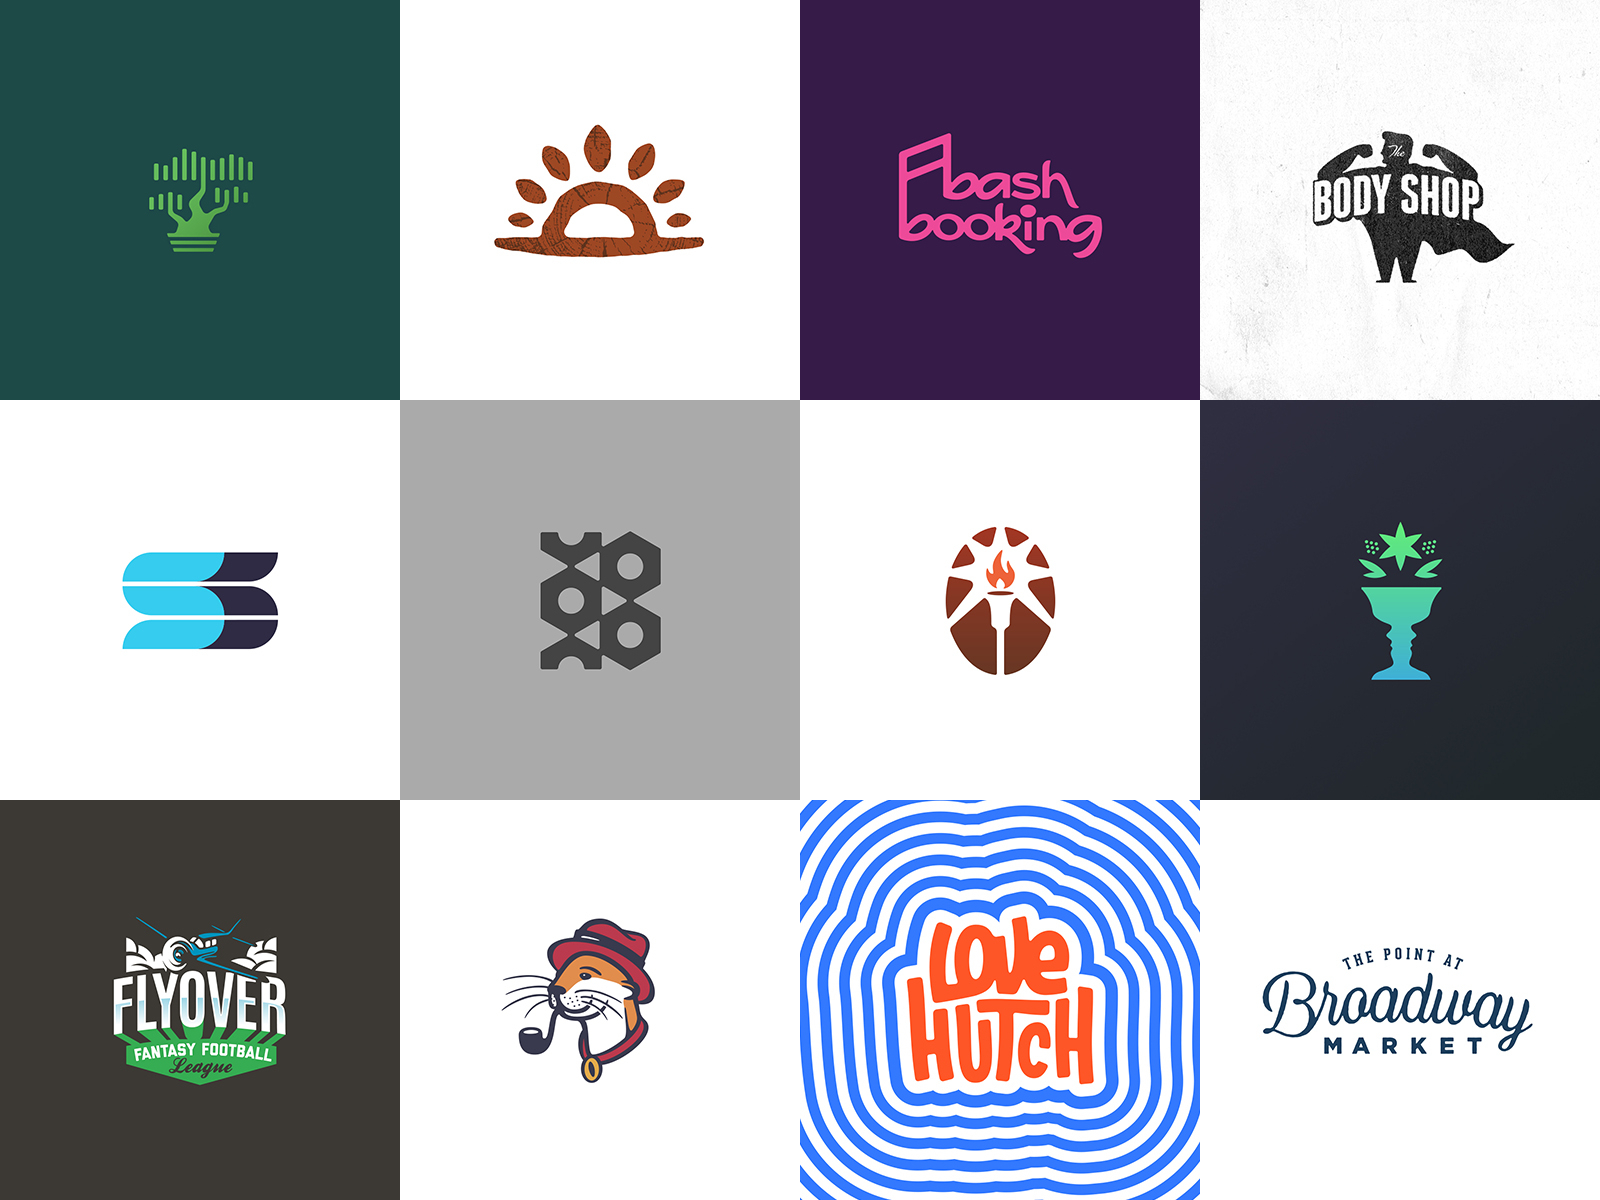 30 Days of Logos by Josiah Z. on Dribbble